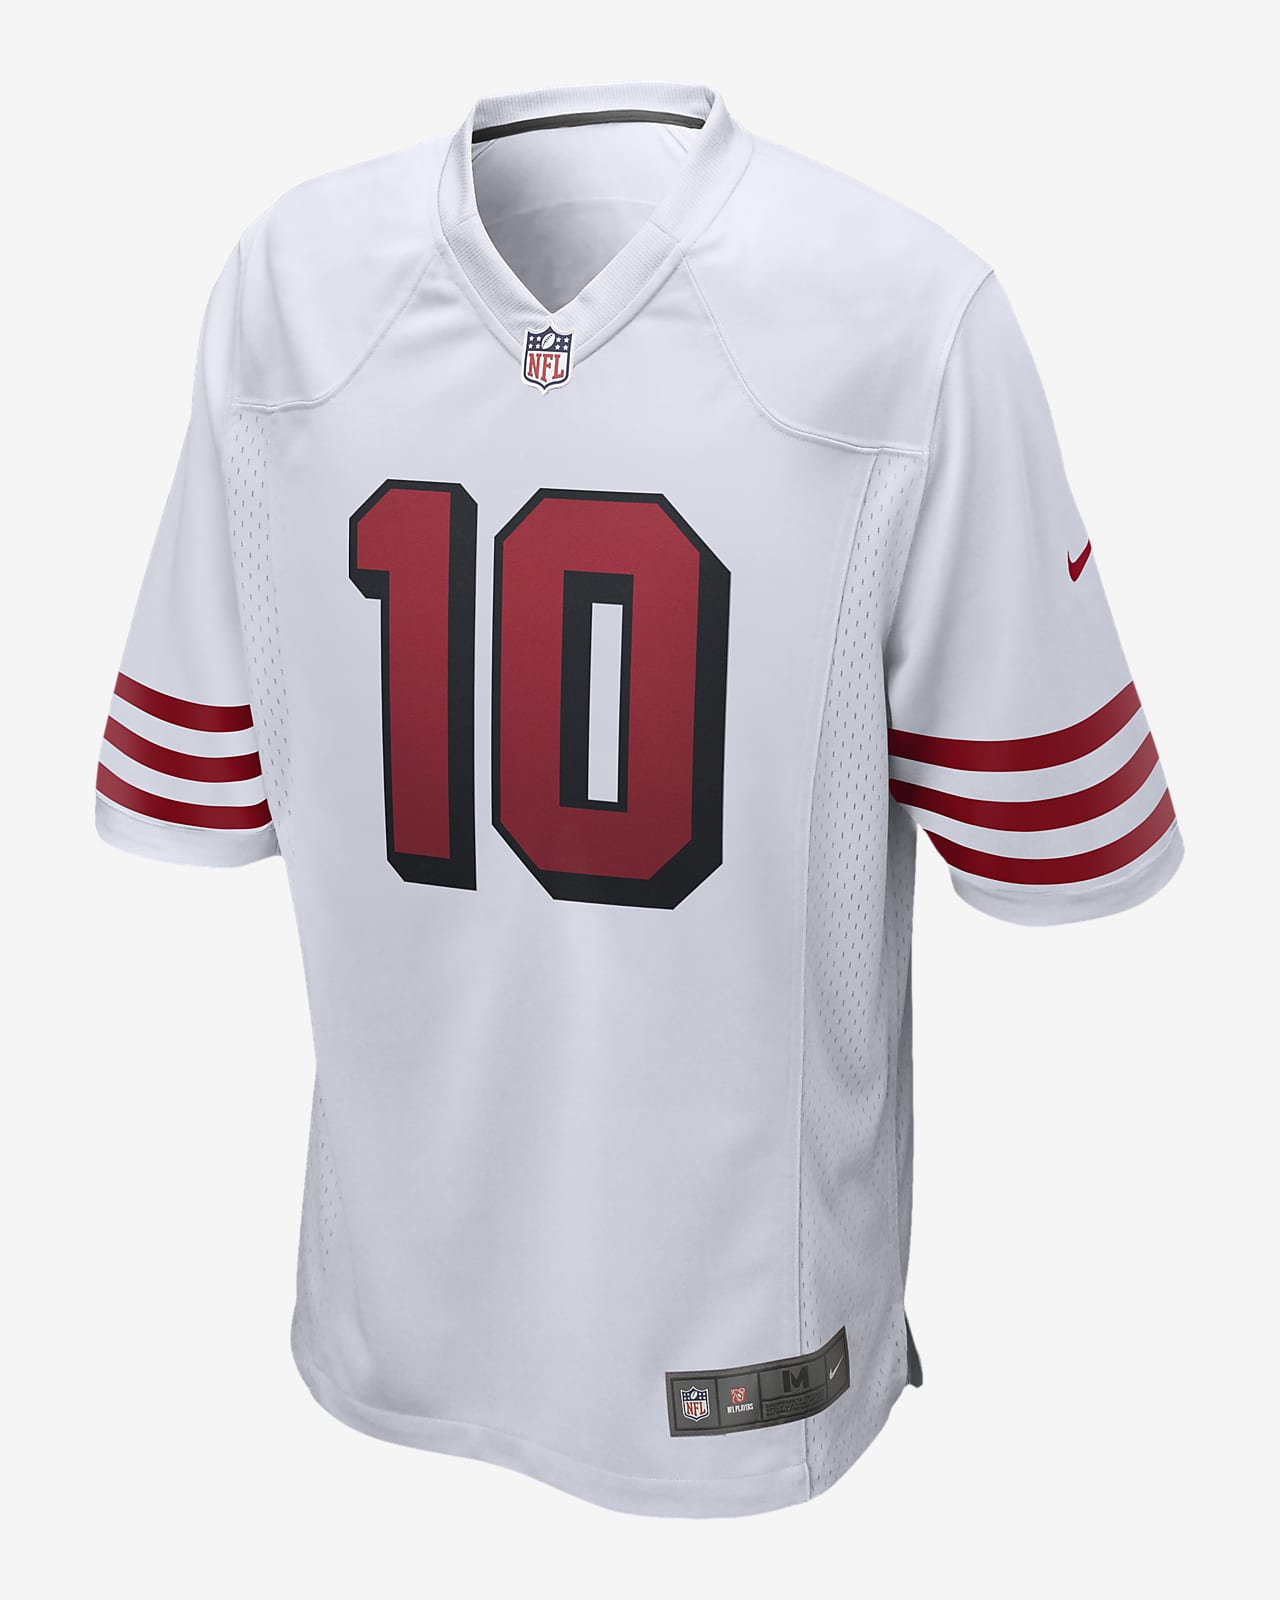 NFL San Francisco 49ers (Jimmy Garoppolo) Men's Game Football Jersey.